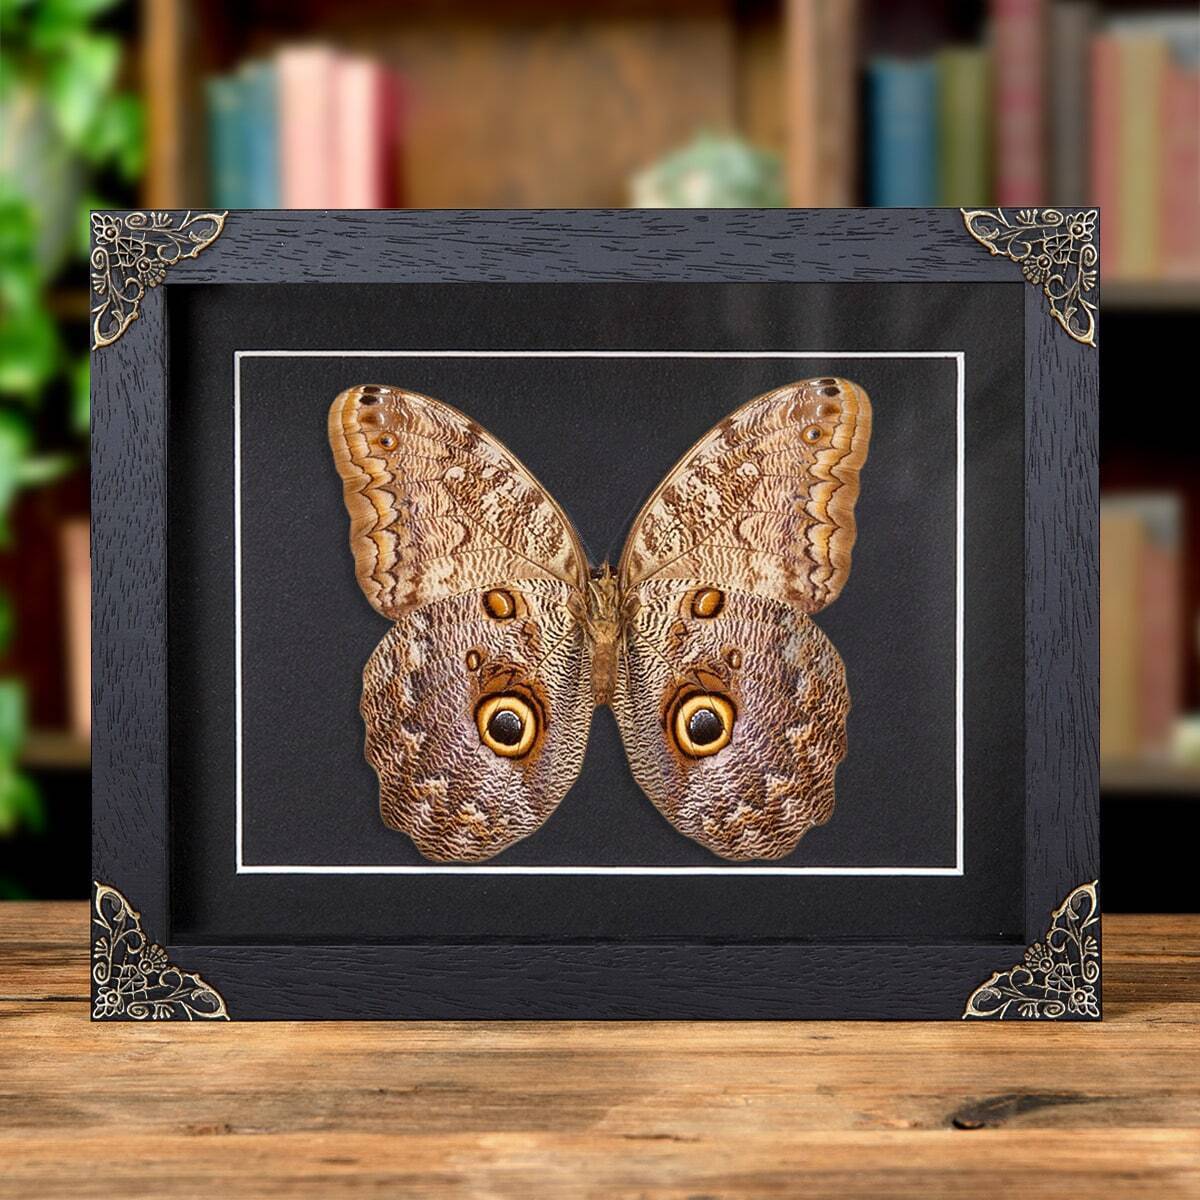 Giant Owl Taxidermy Butterfly in Baroque Style Frame (Caligo telamonius)